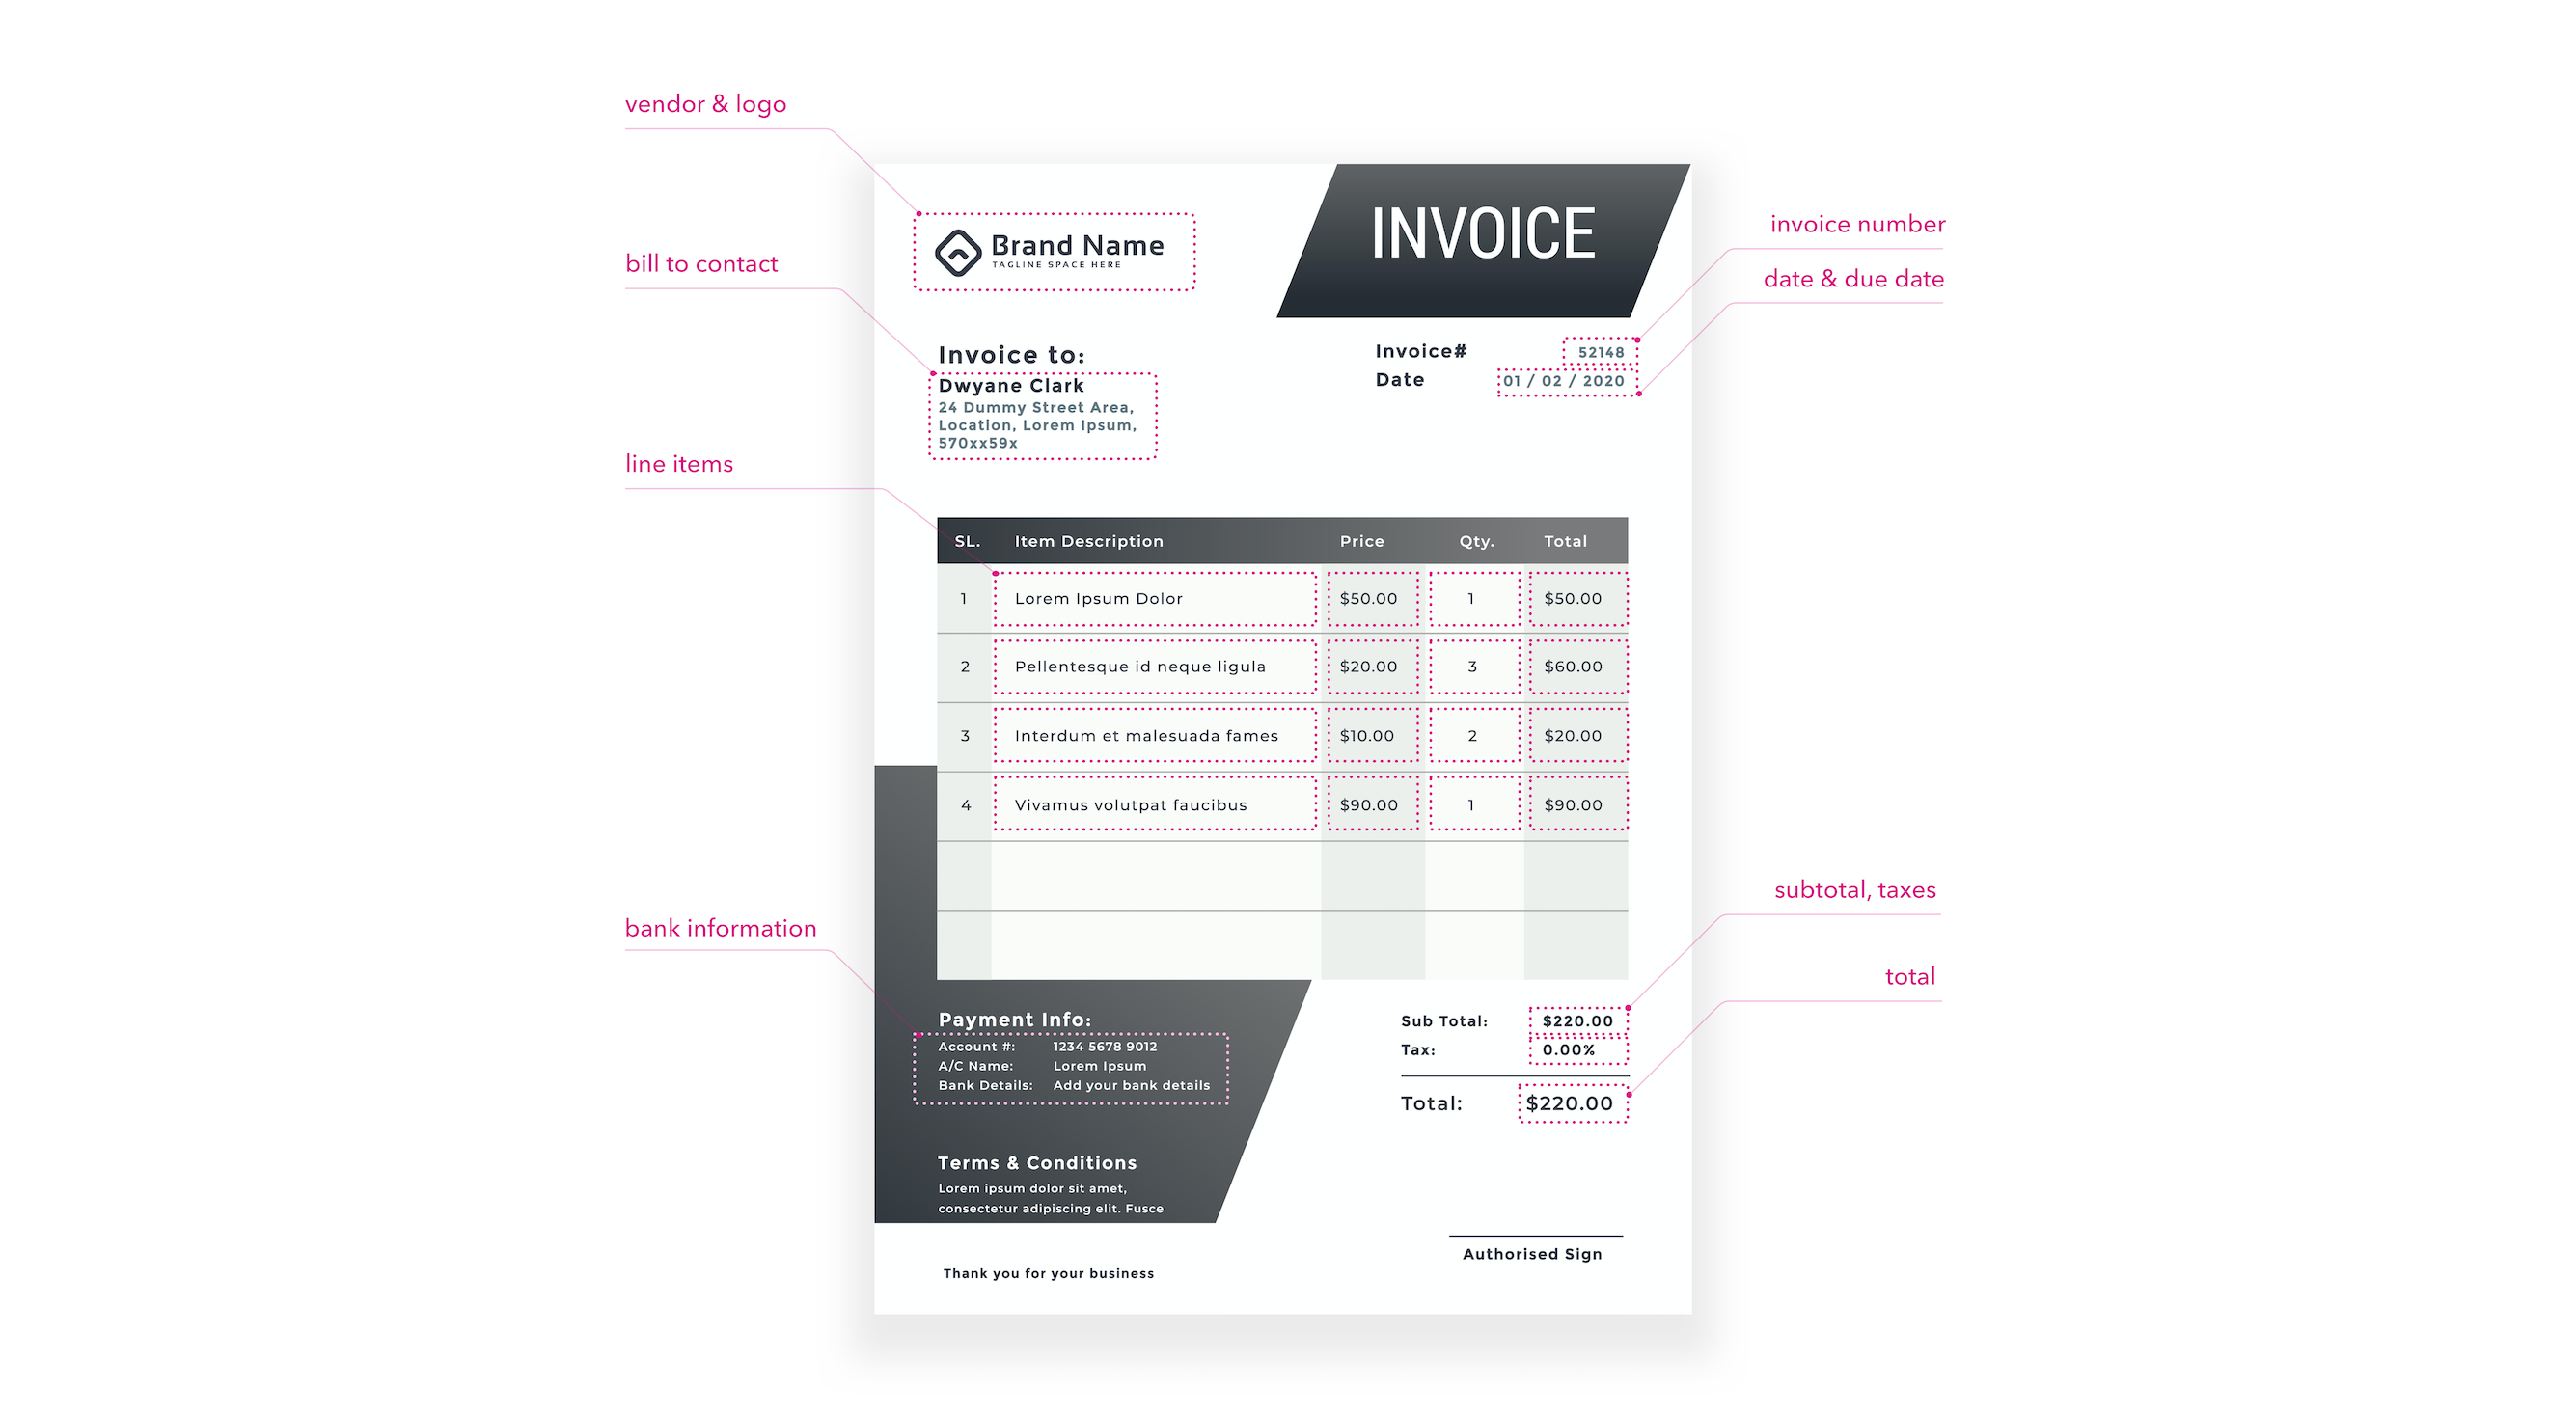 image of veryfi invoice process